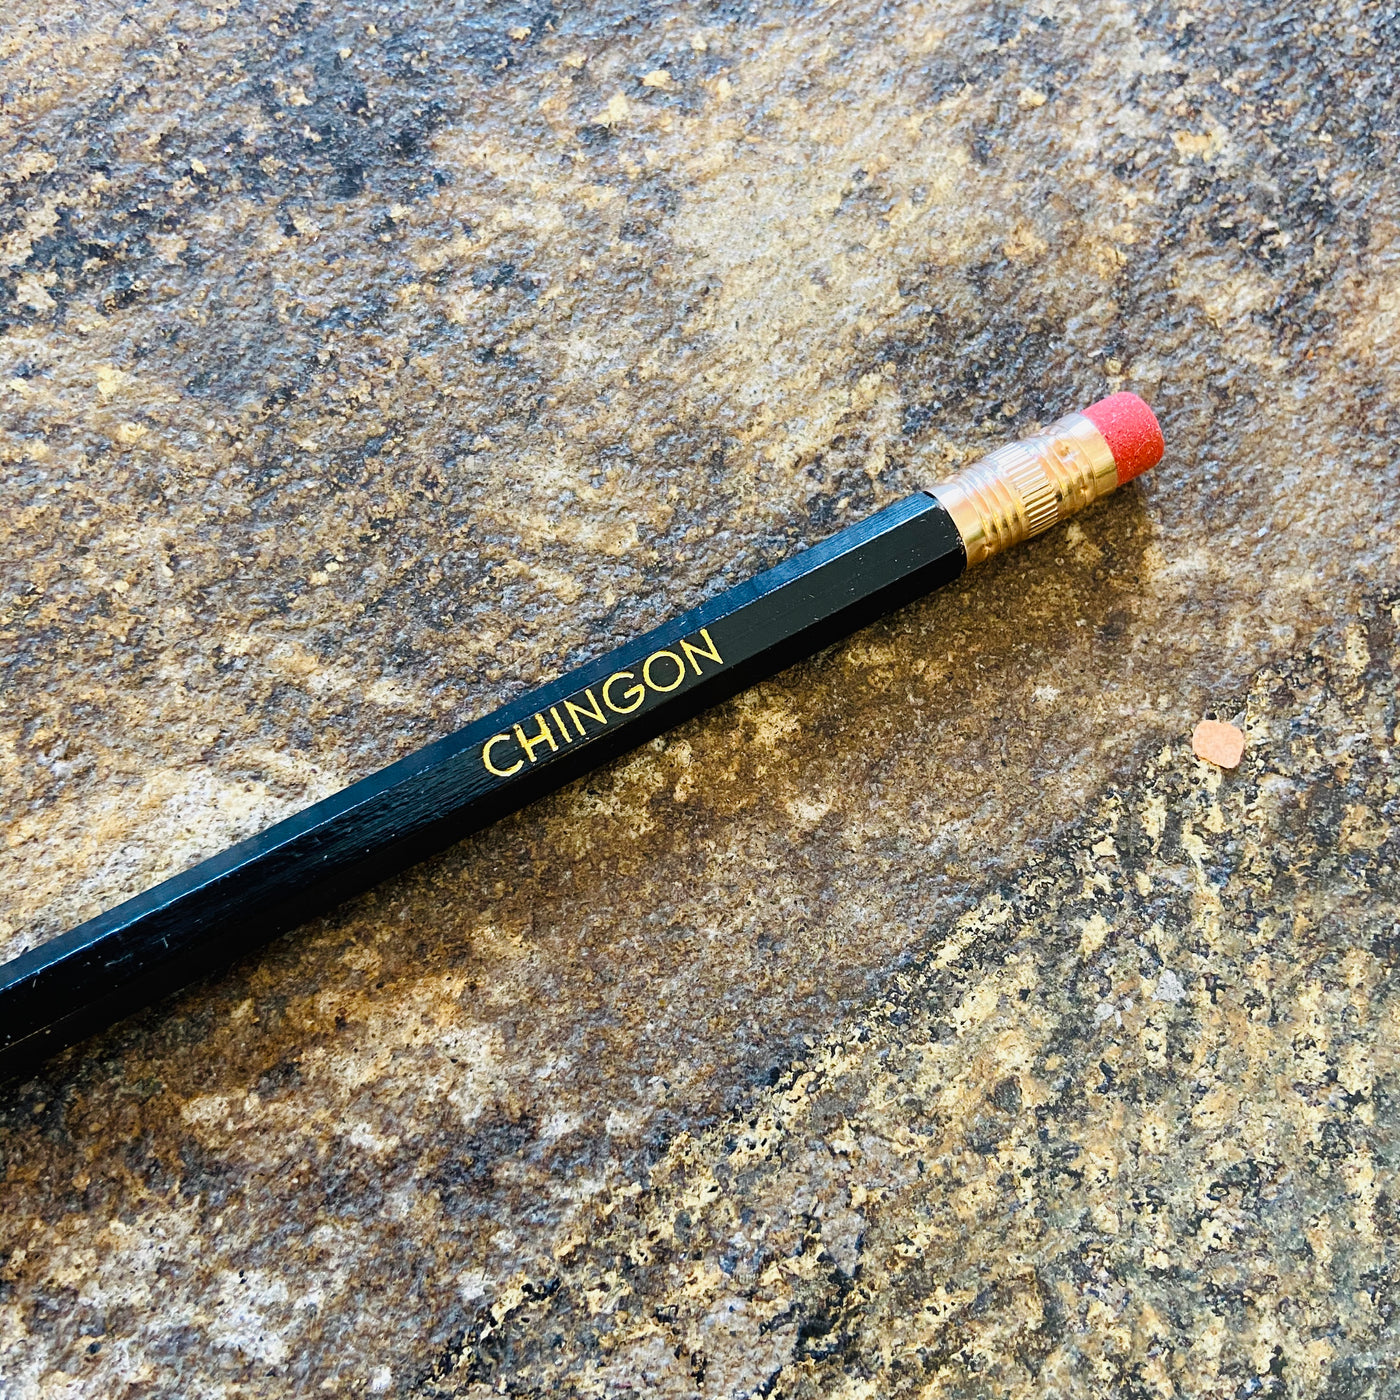 Black Chingon phrase pencil.